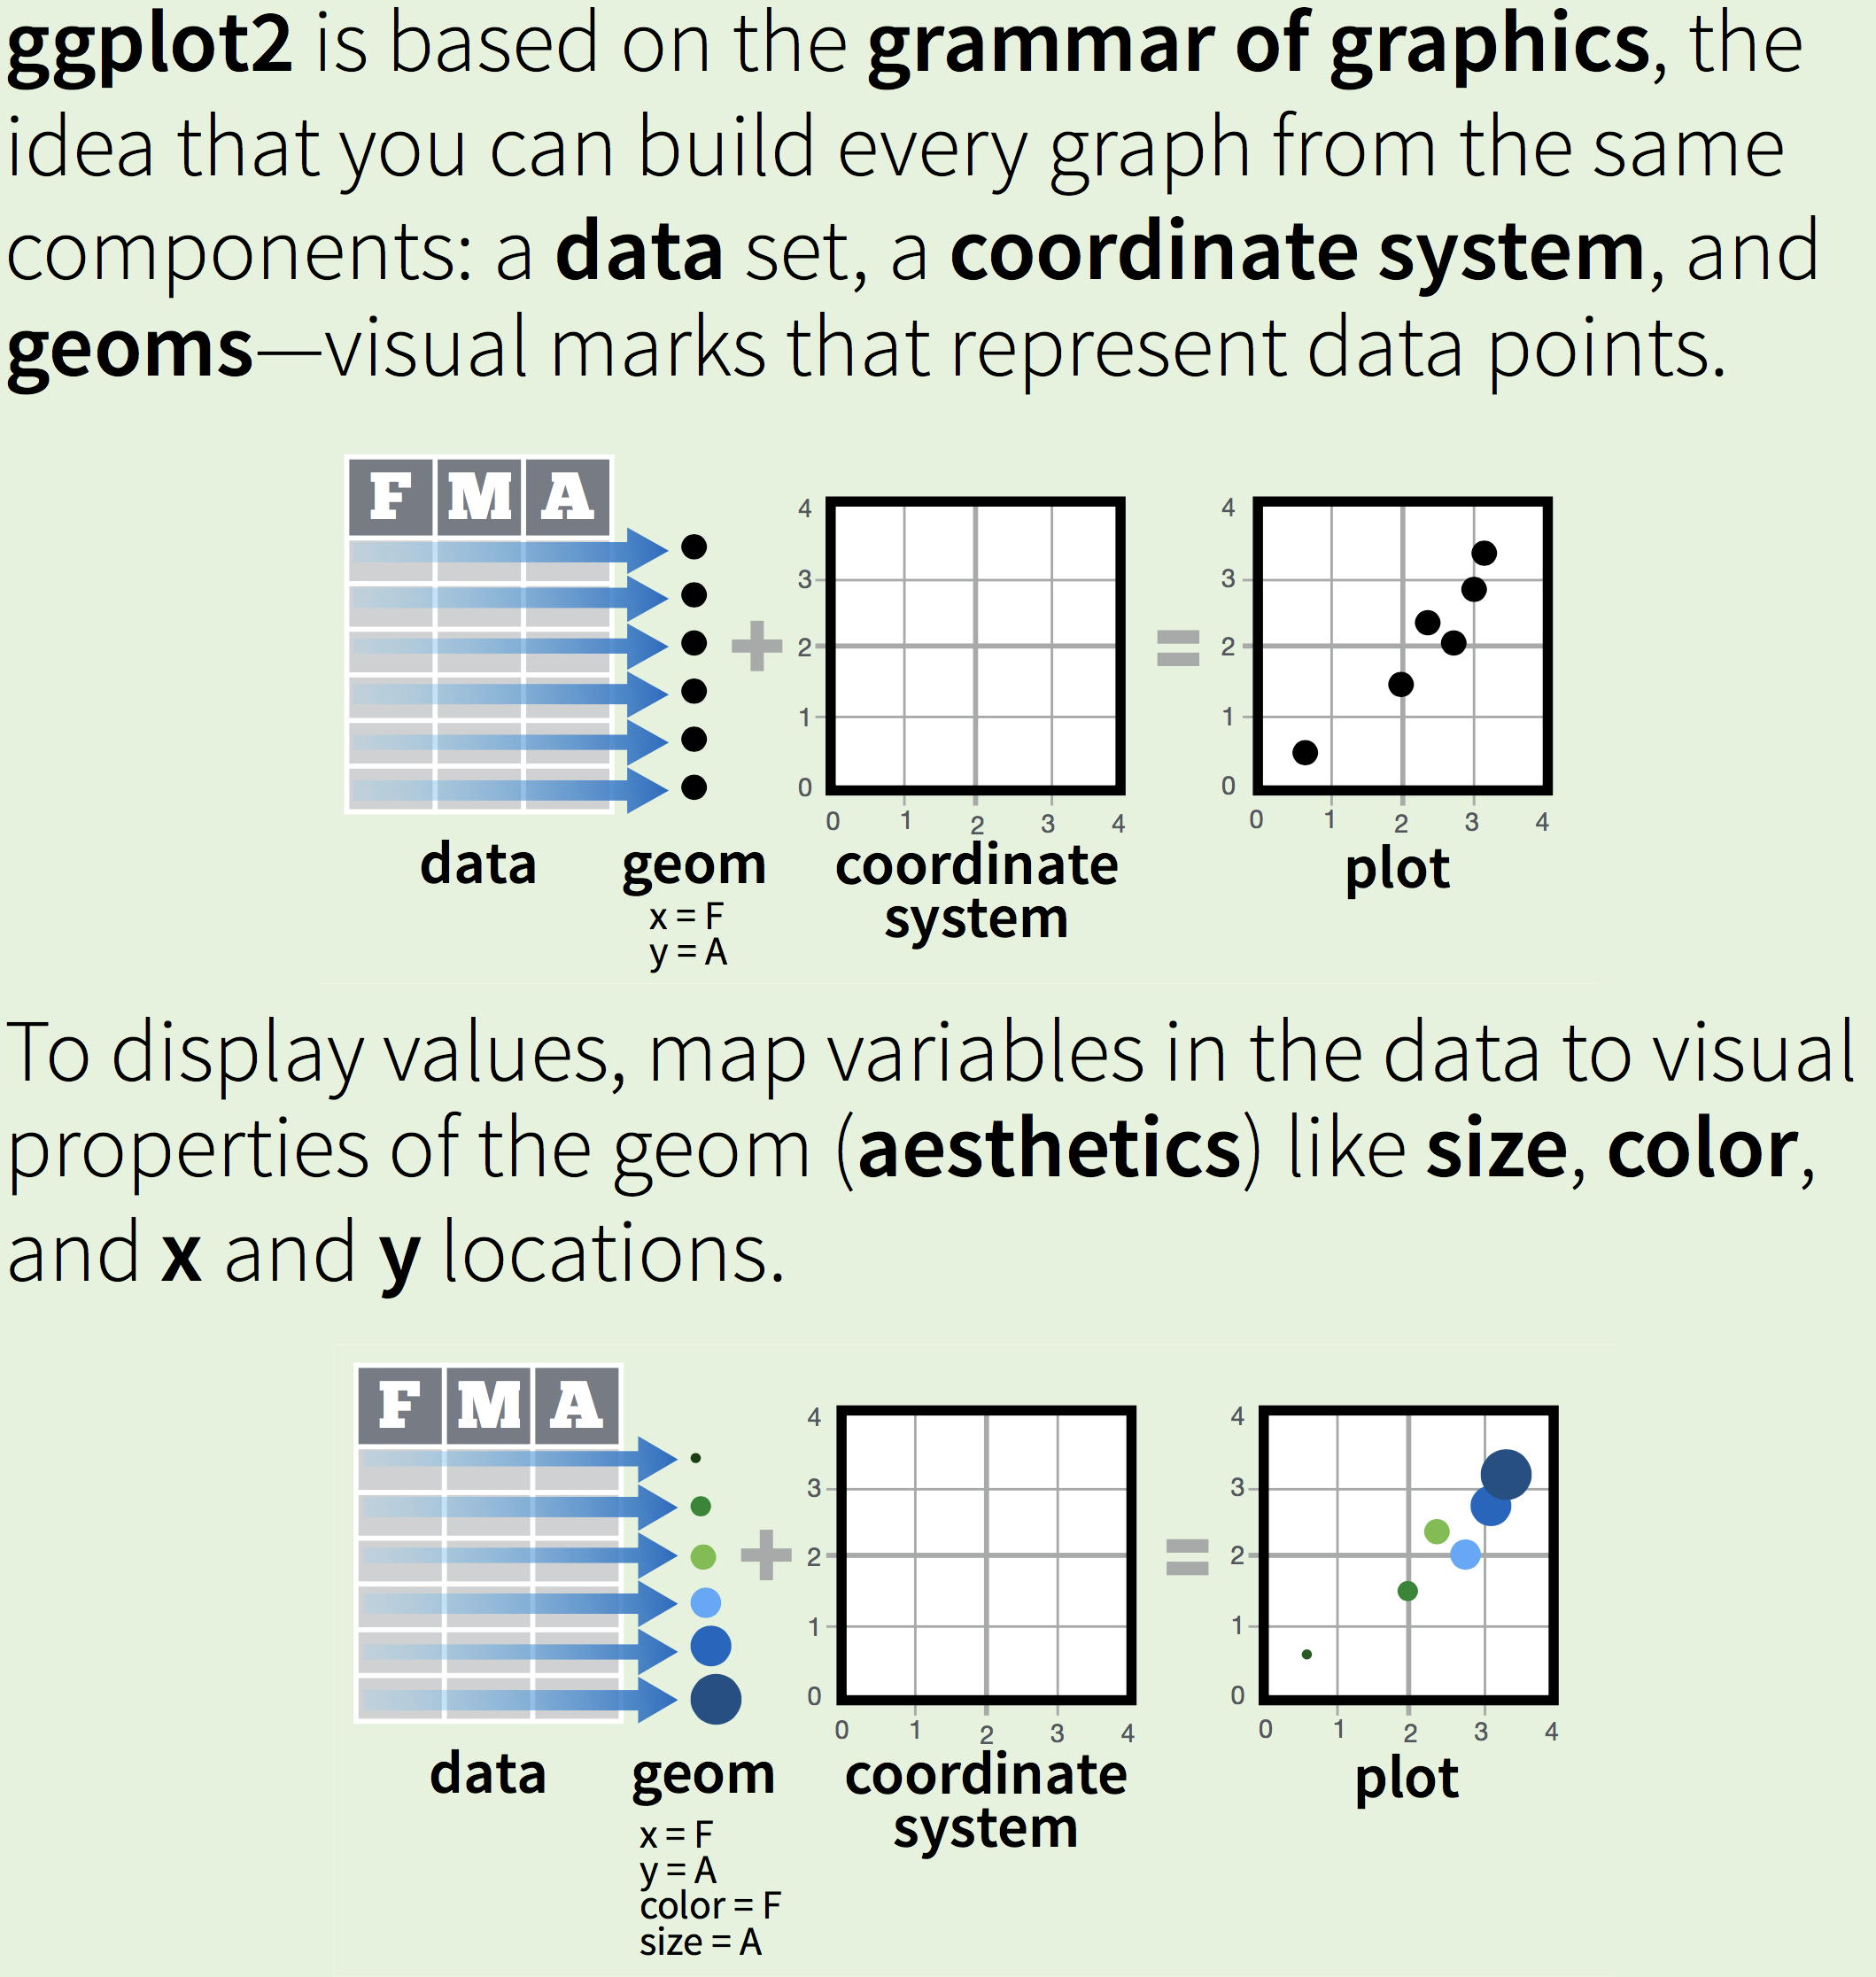 The grammar of graphics